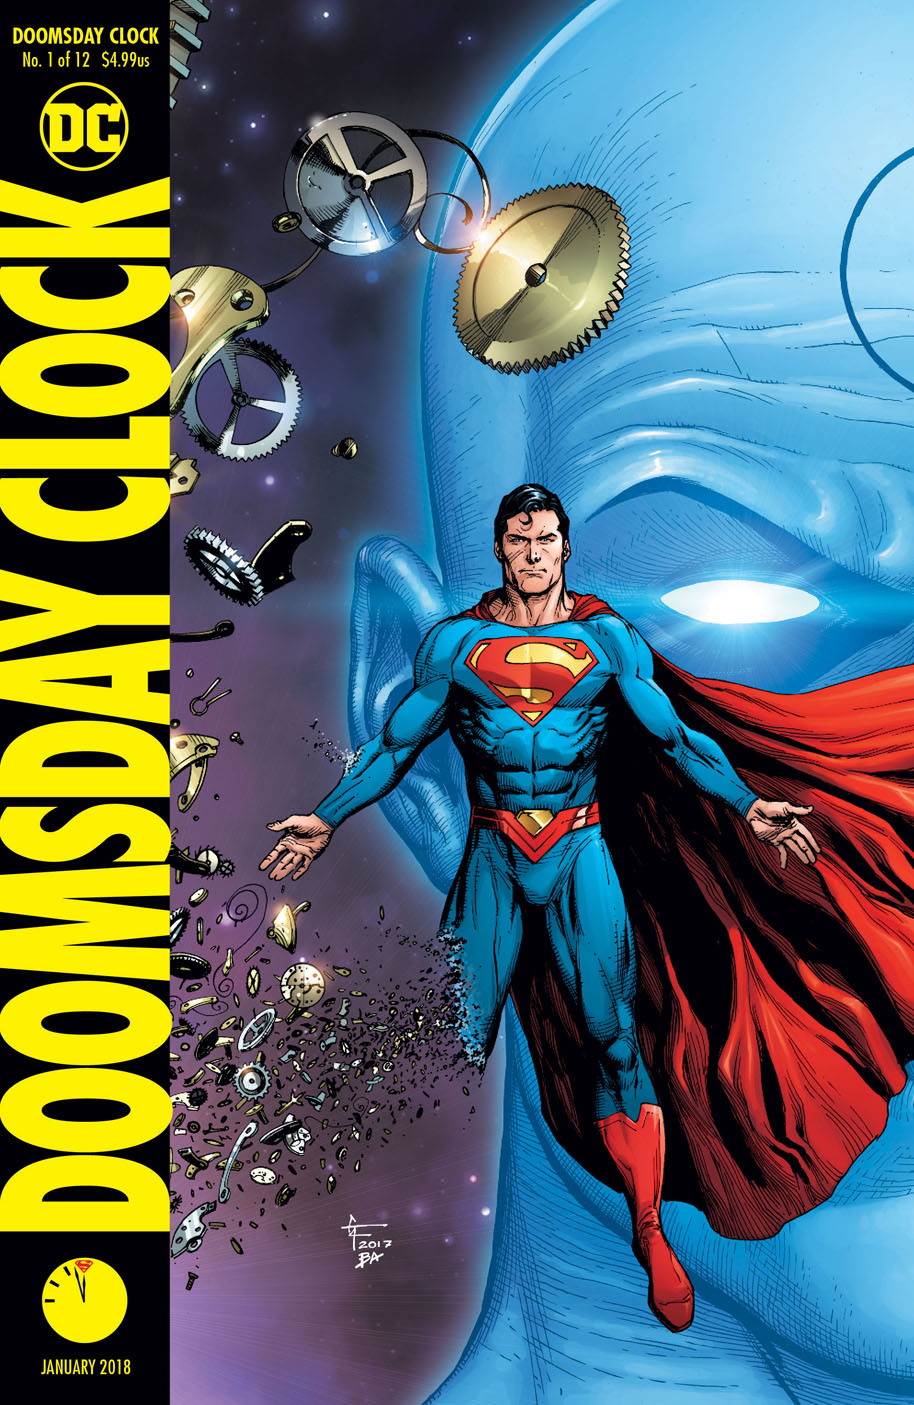 42 -  [DC COMICS] Publicaciones Universo DC: Discusión General v2 - Página 10 Variant-cover-of-doomsday-clock-1-with-superman-and-doctor-manhattan